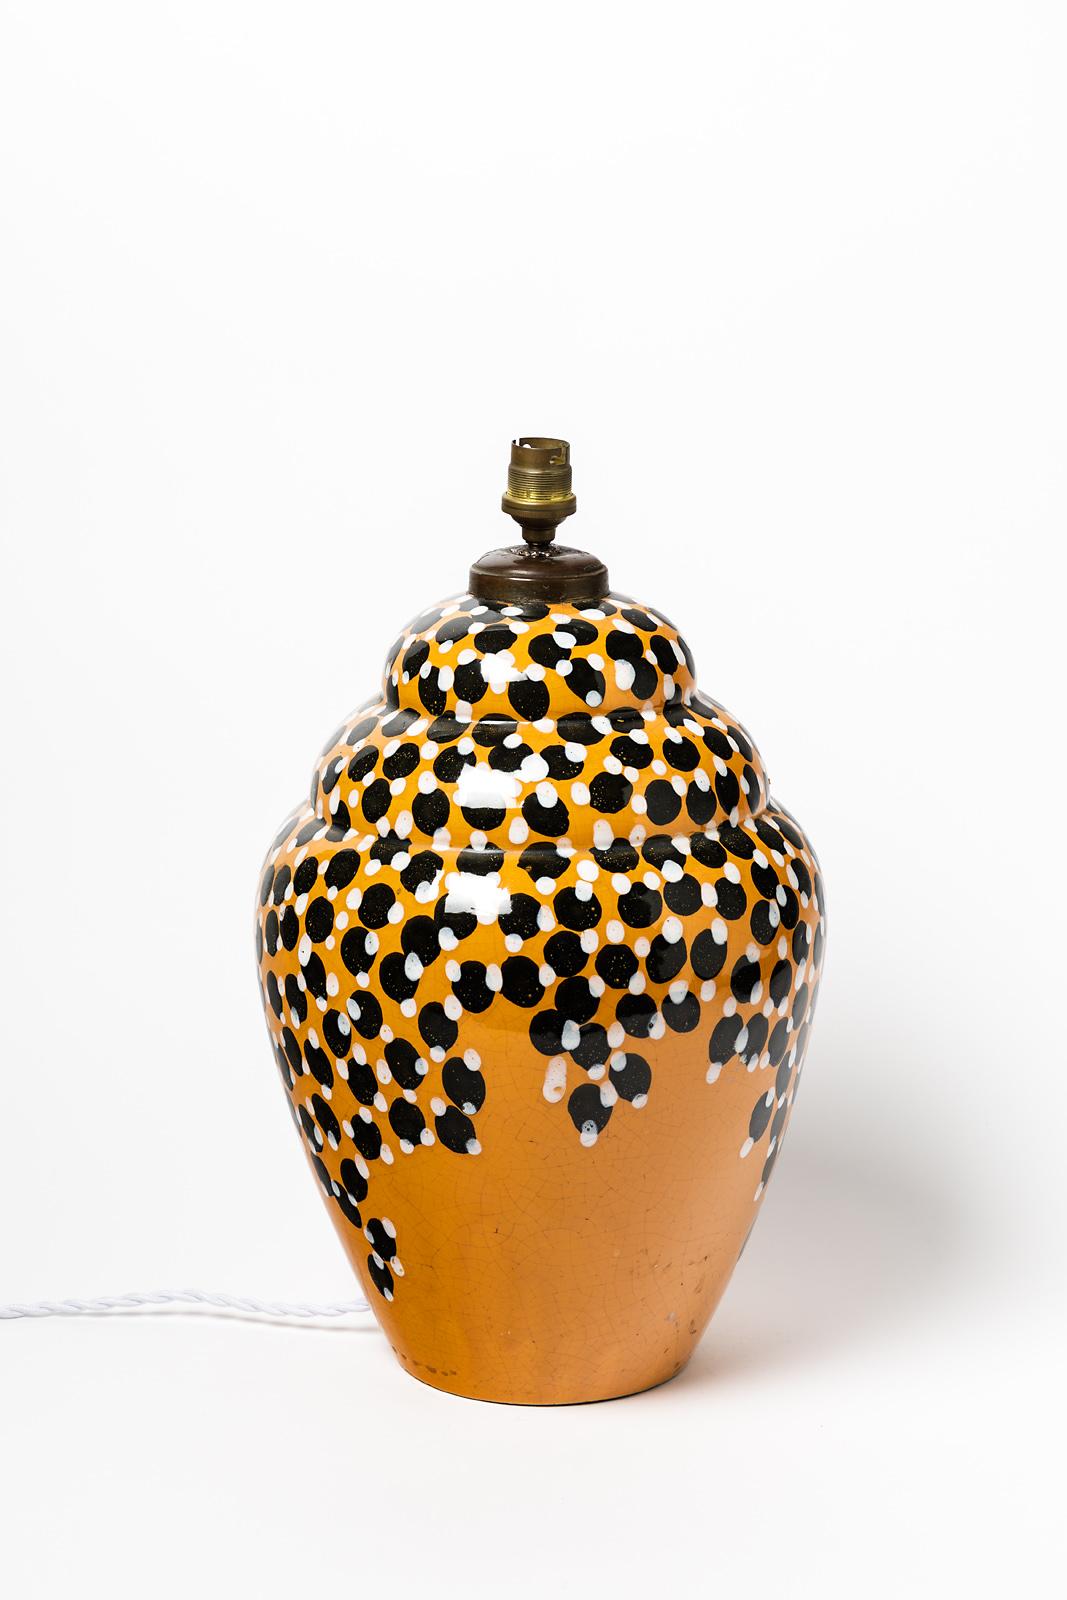 French Large Art Deco 1930 Orange Black and White Ceramic Table Lamp Style of Primavera